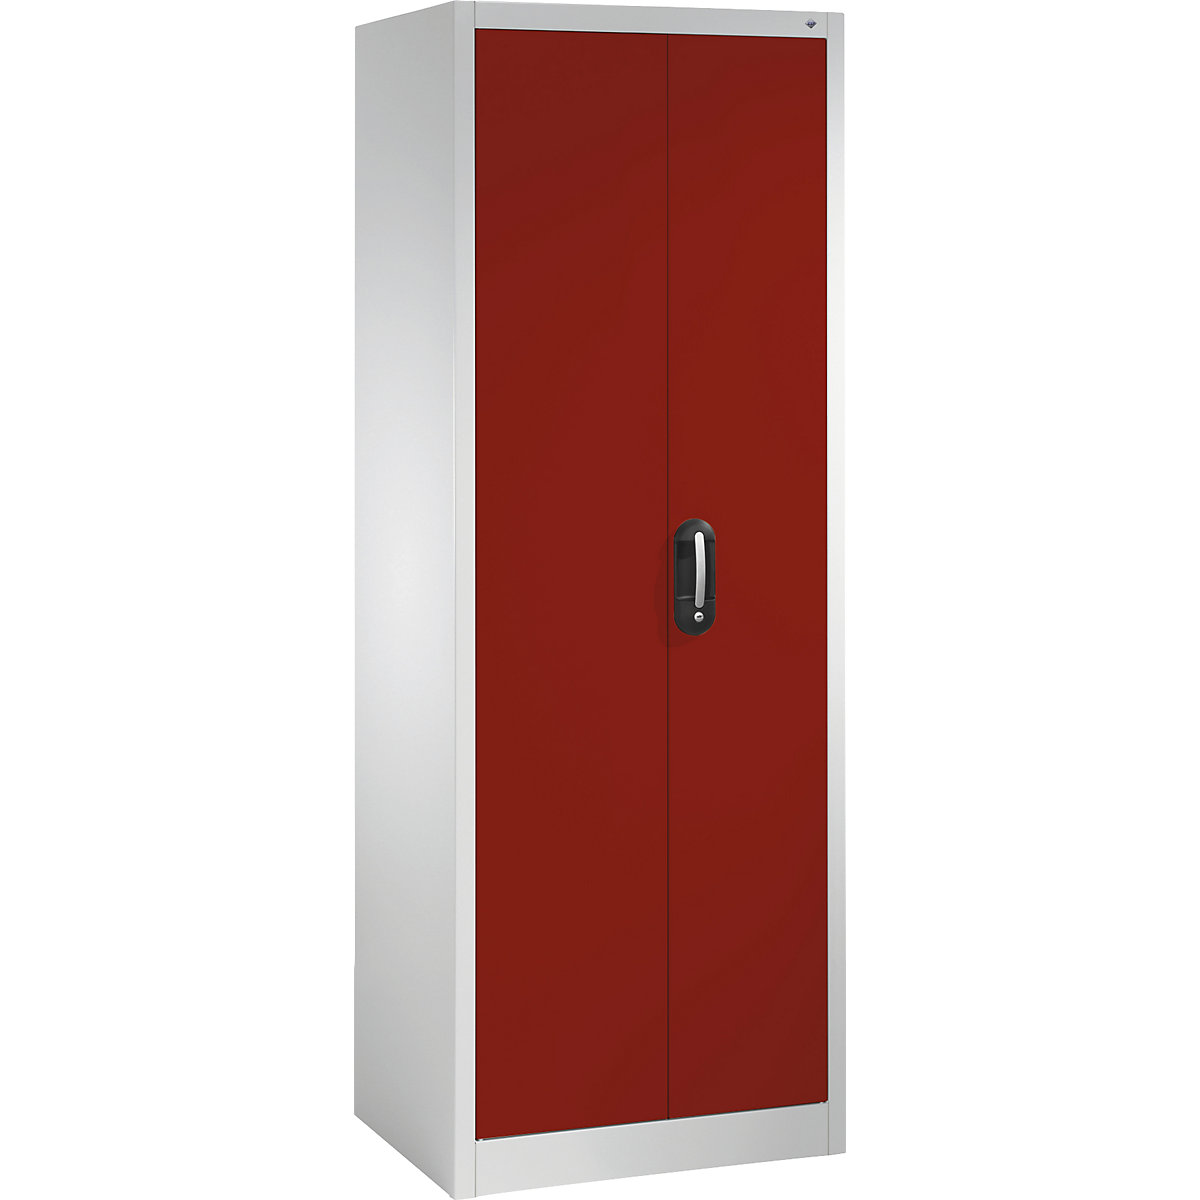 C+P – ACURADO universal cupboard, WxD 700 x 500 mm, light grey / ruby red